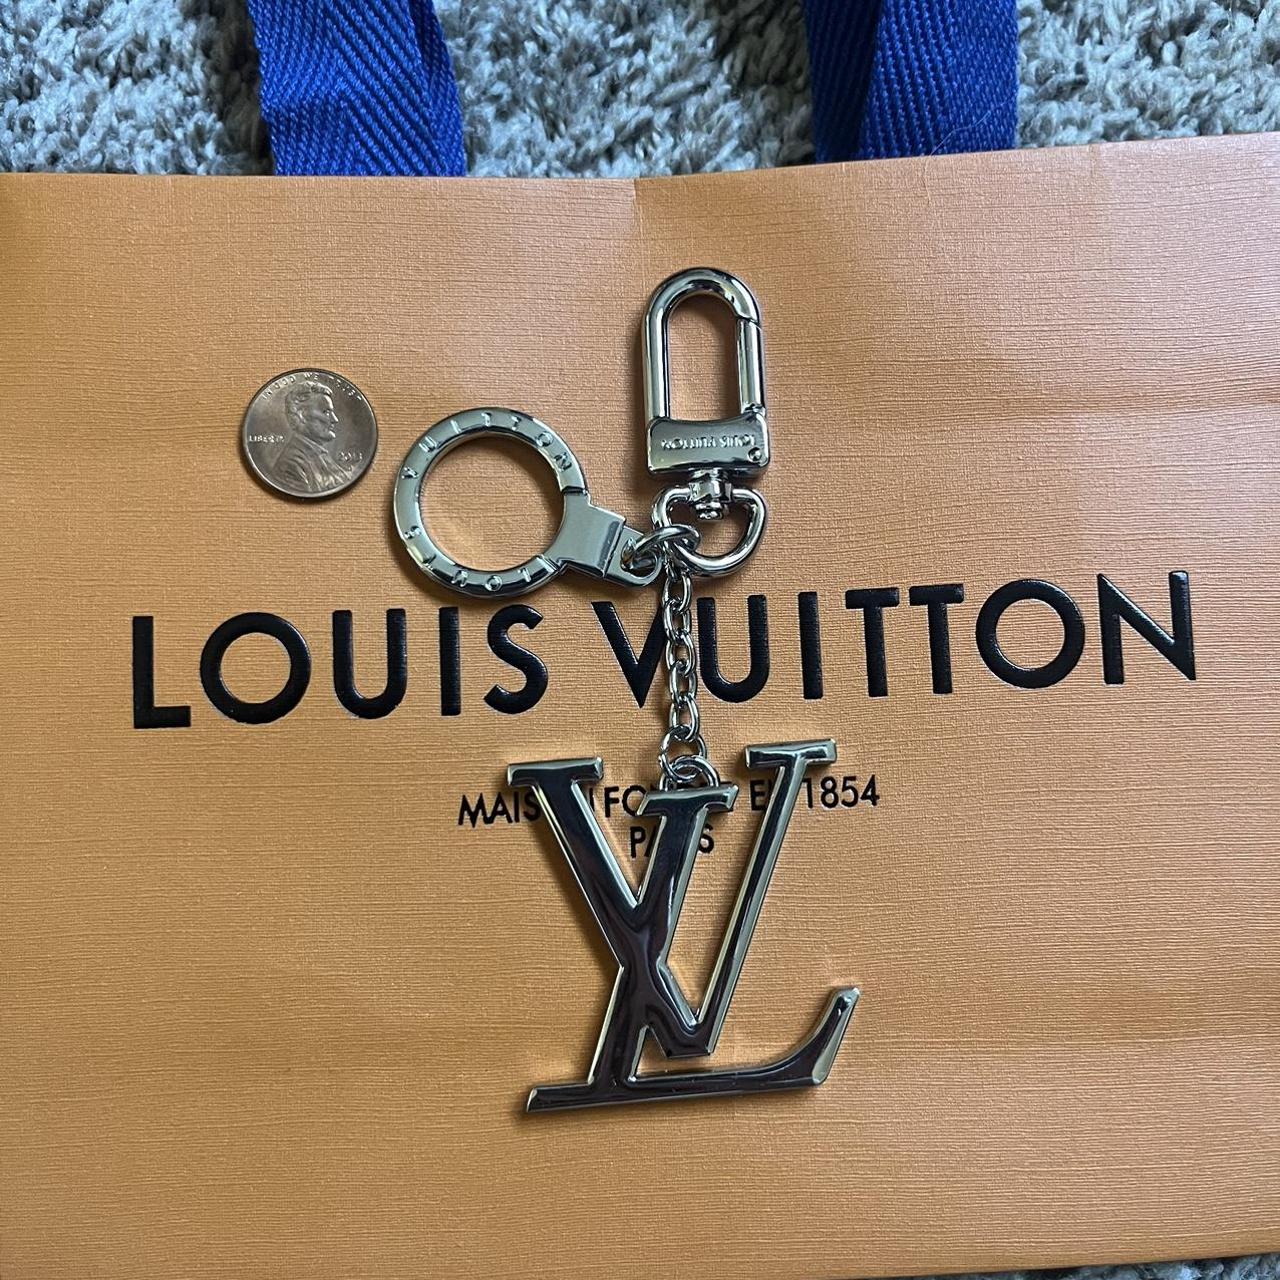 Louis Vuitton Key Chain Charm Holder Limited Edition - Depop